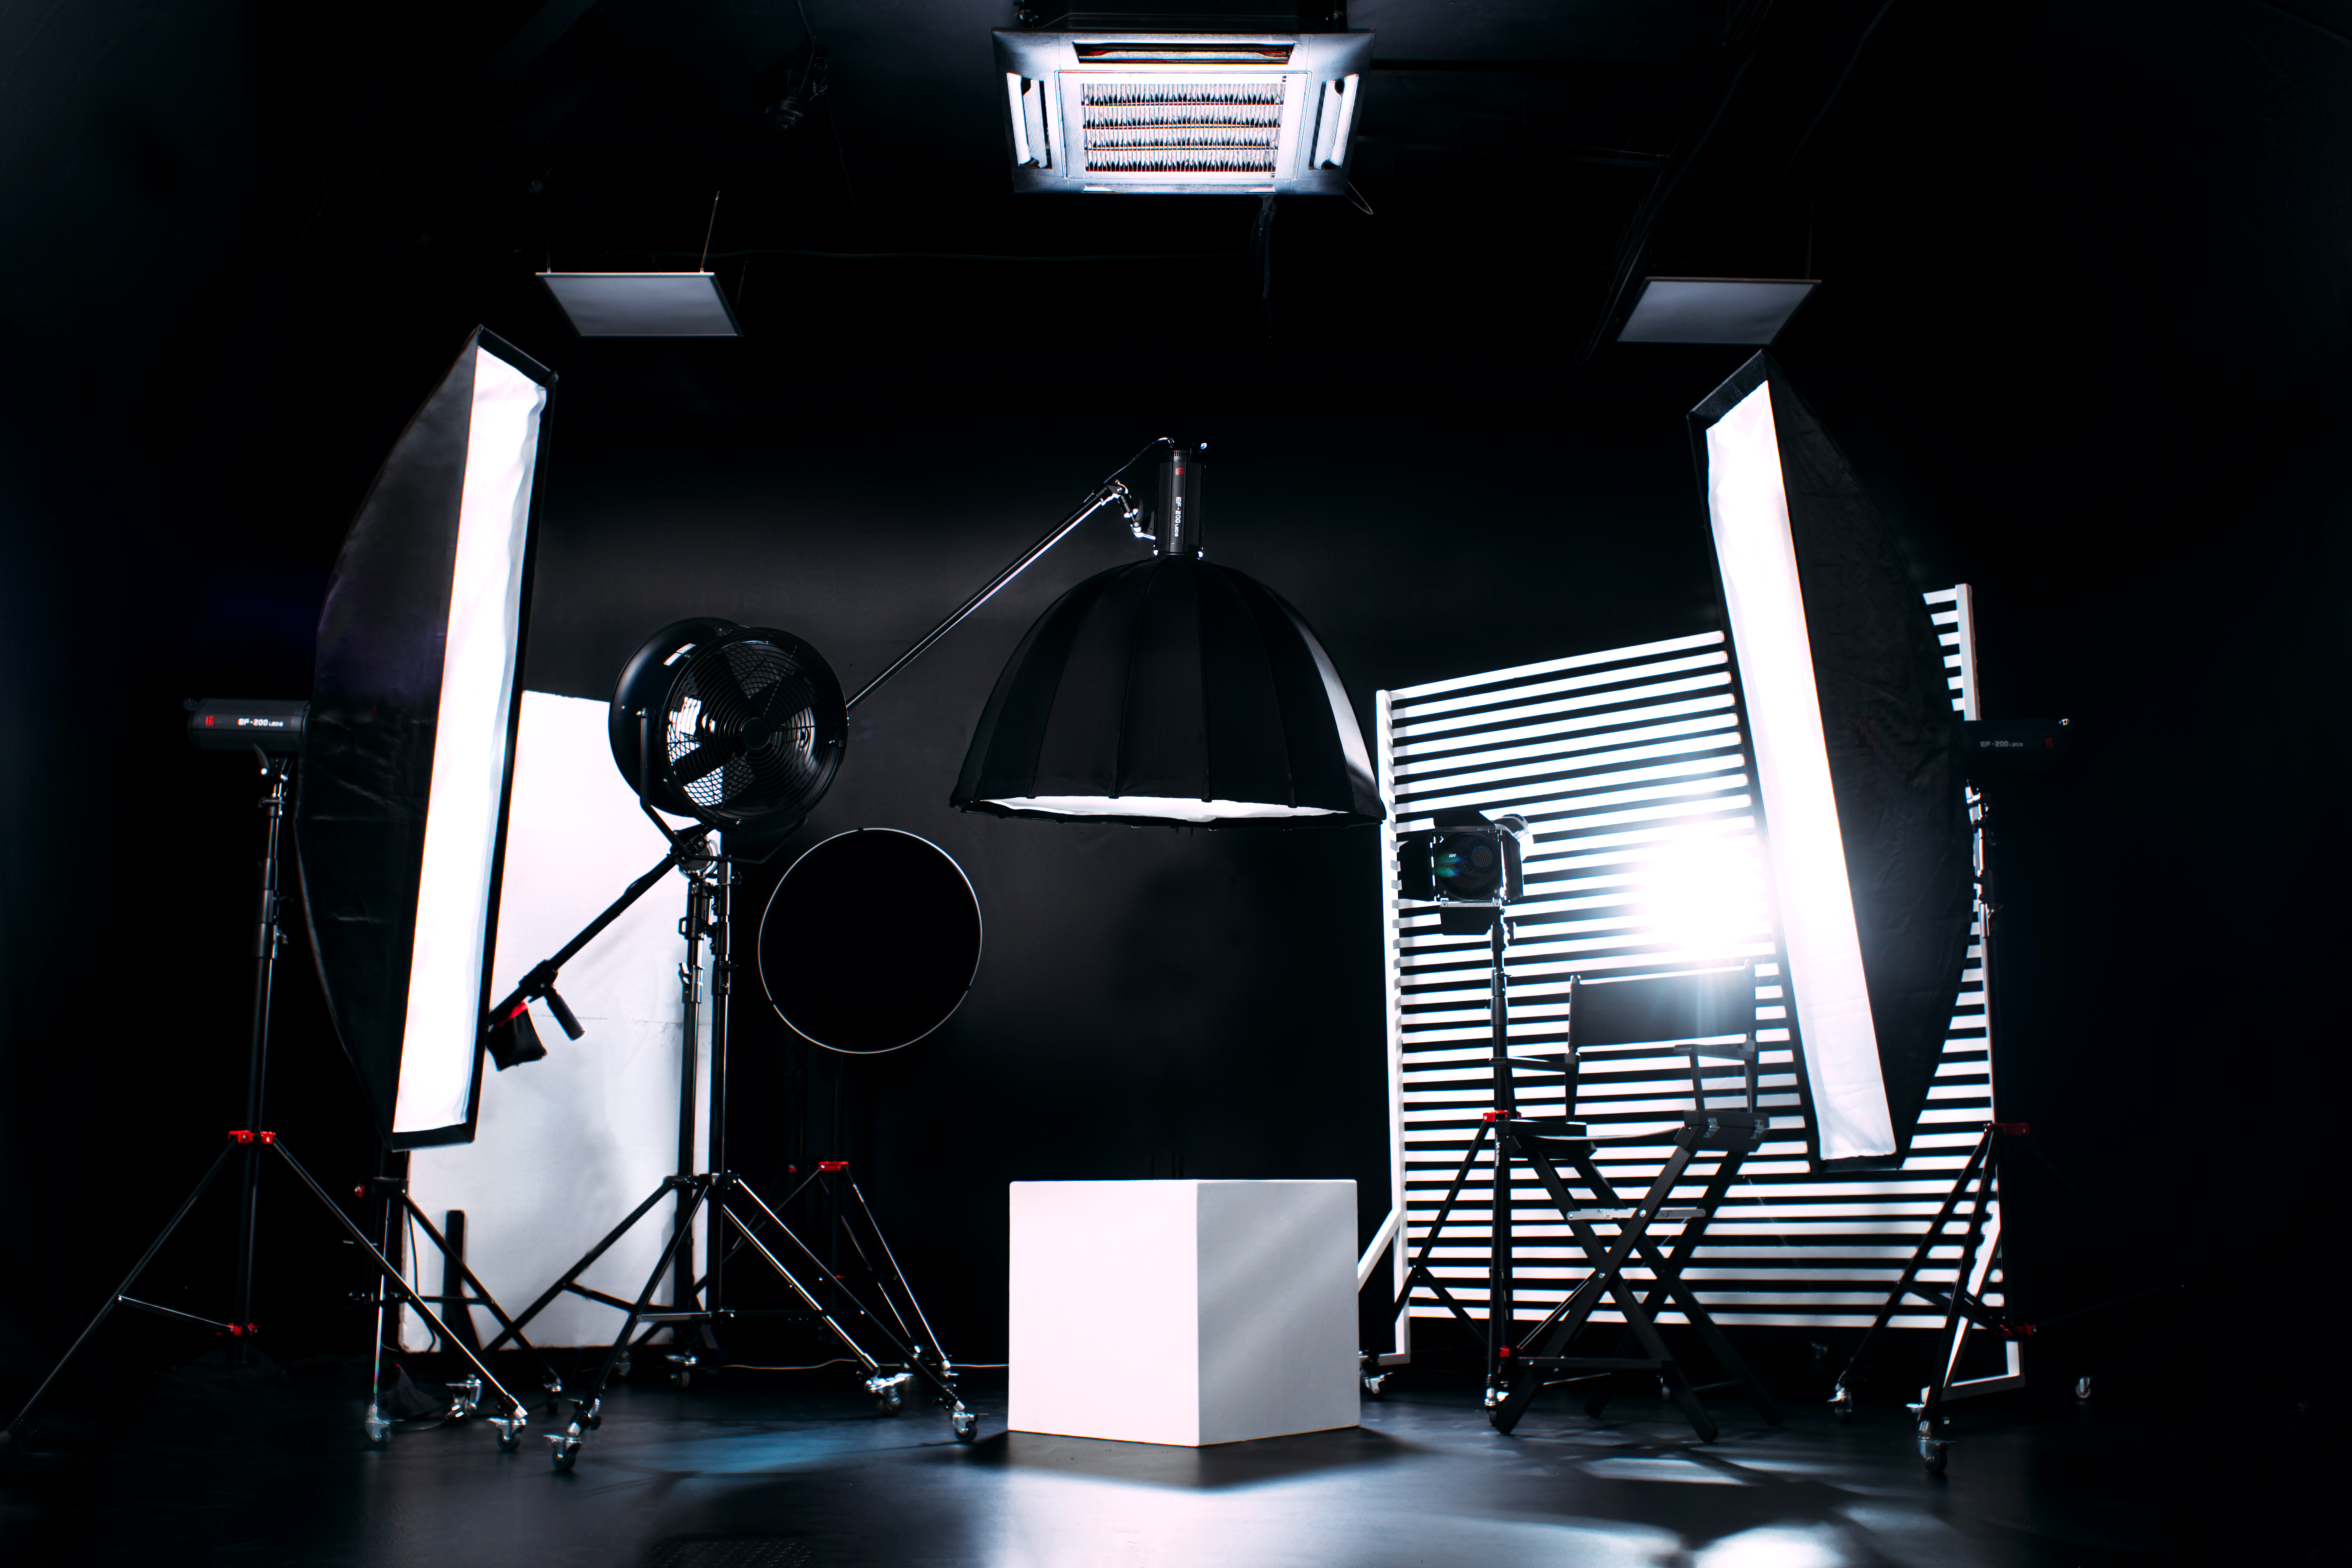 modern photo studio with professional equipment